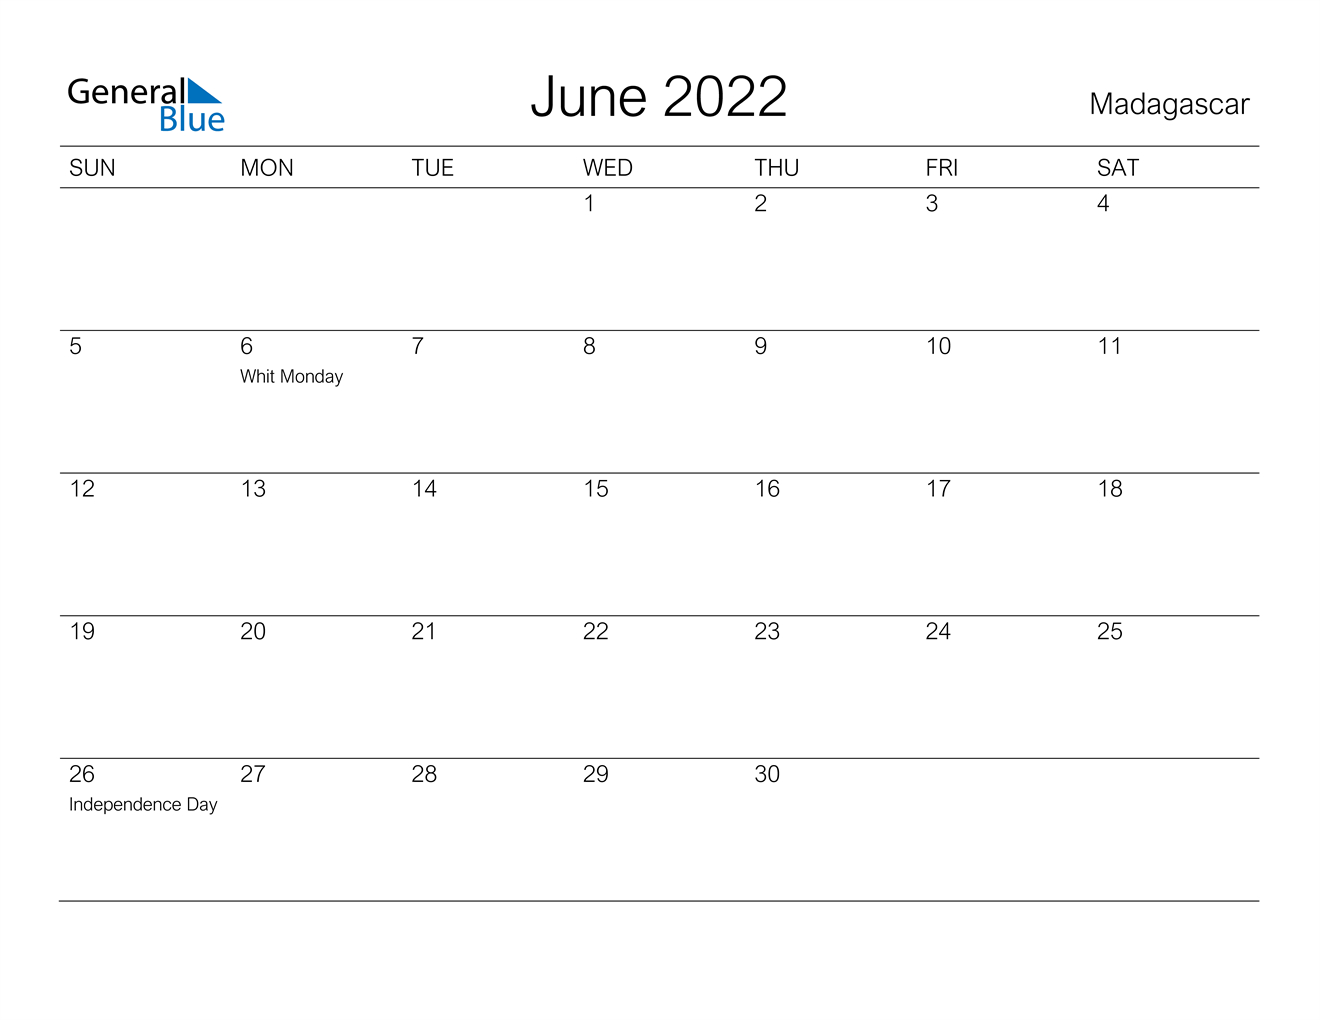 June 2022 Calendar - Madagascar  Calendar Jan 2022 To June 2022